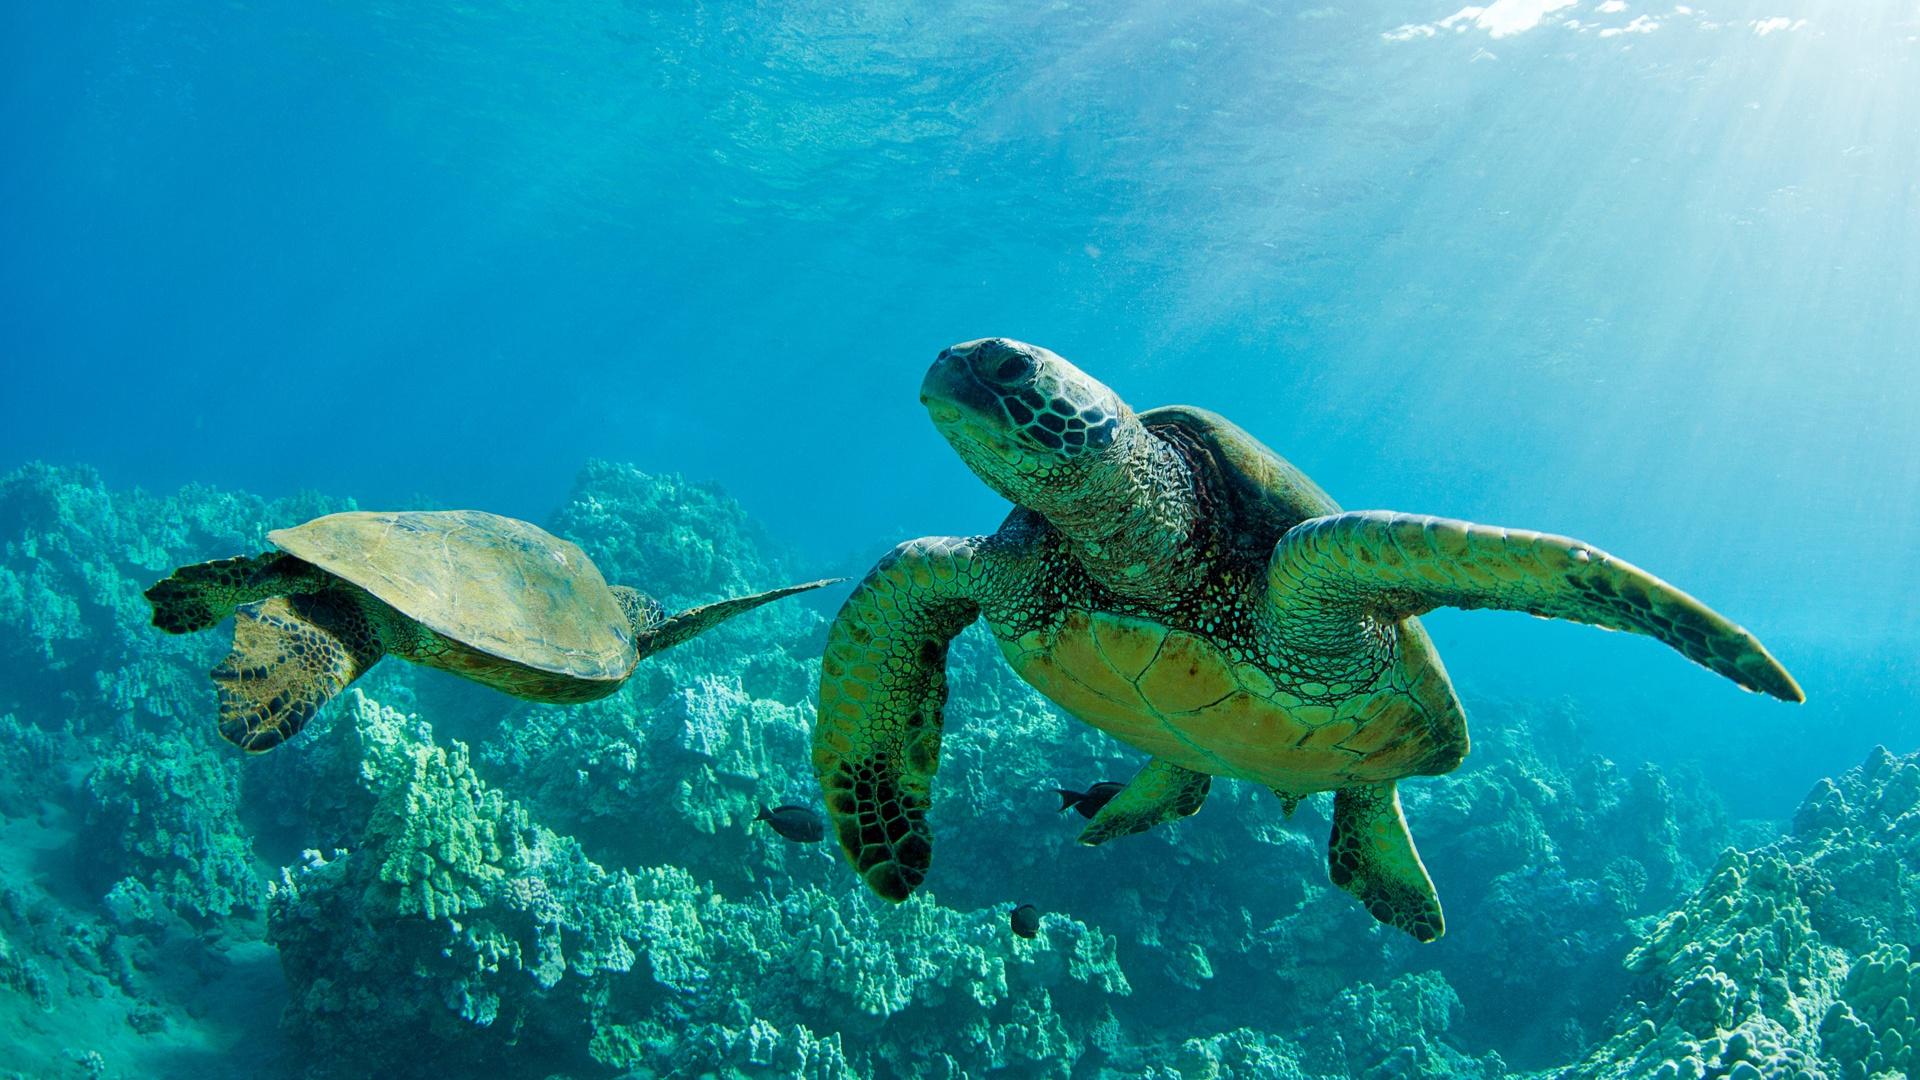 Sea Turtles Wallpaper